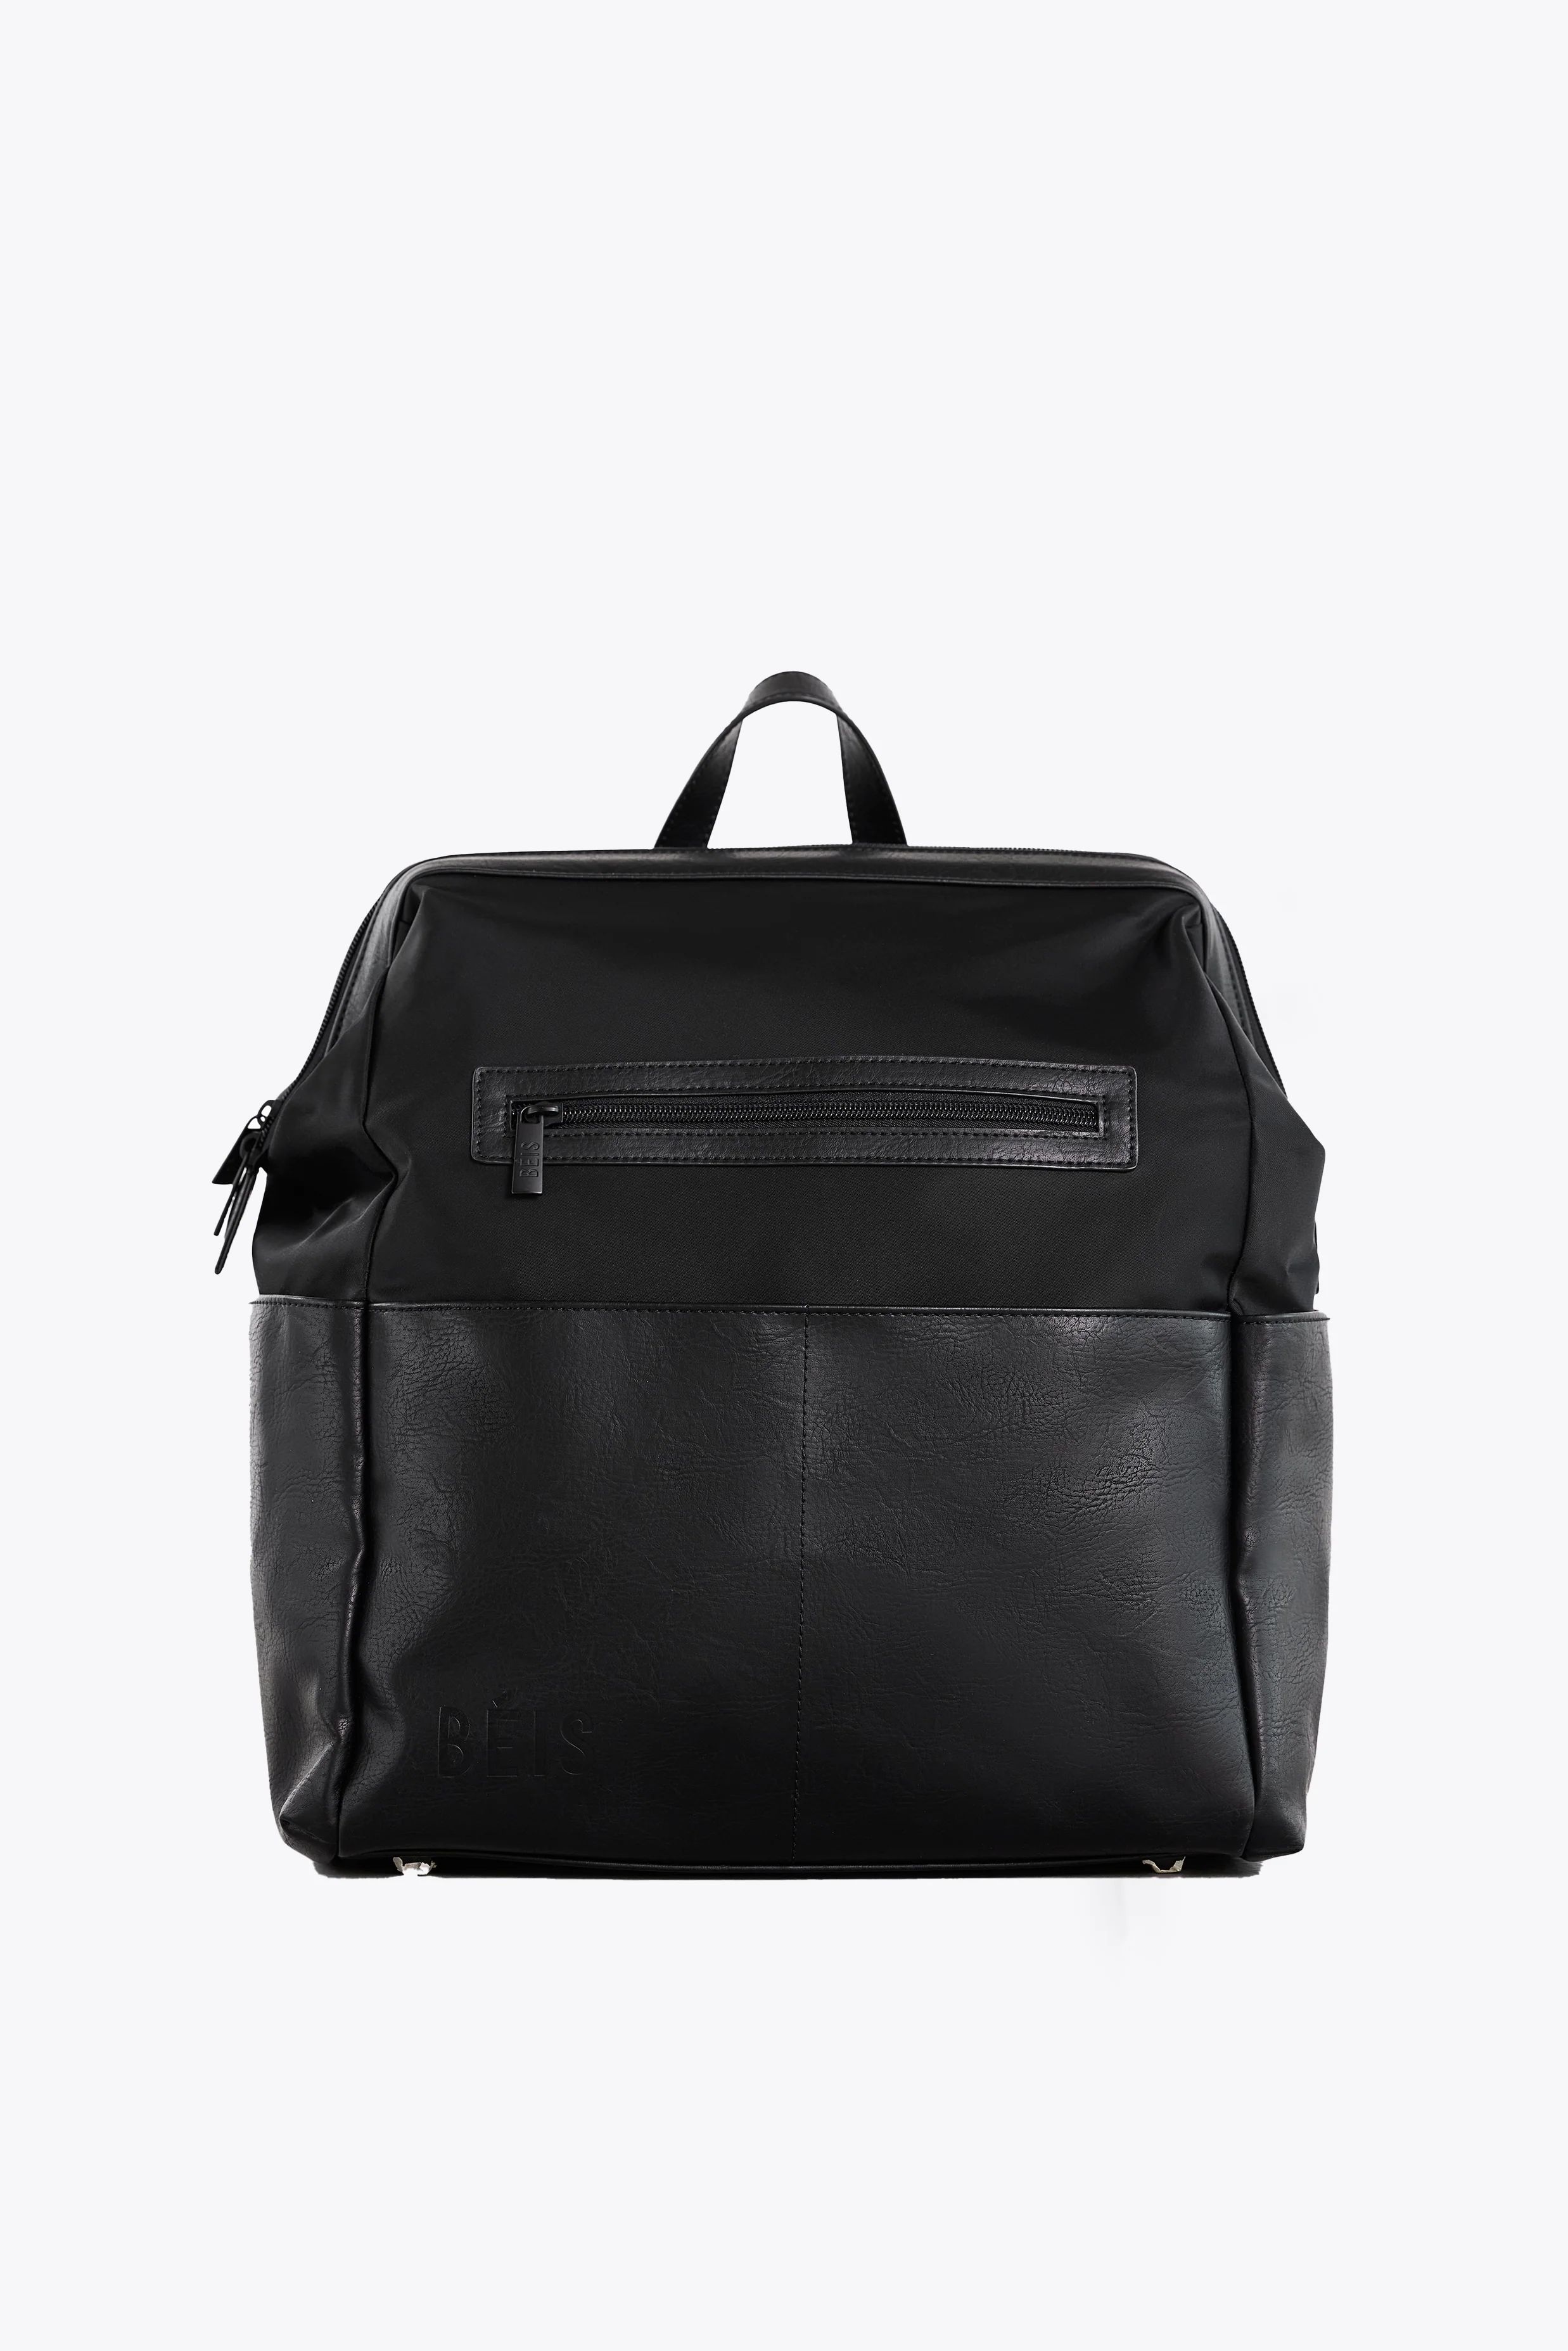 BÉIS 'The Diaper Backpack' in Black - Black Diaper Bag & Diaper Backpack | BÉIS Travel